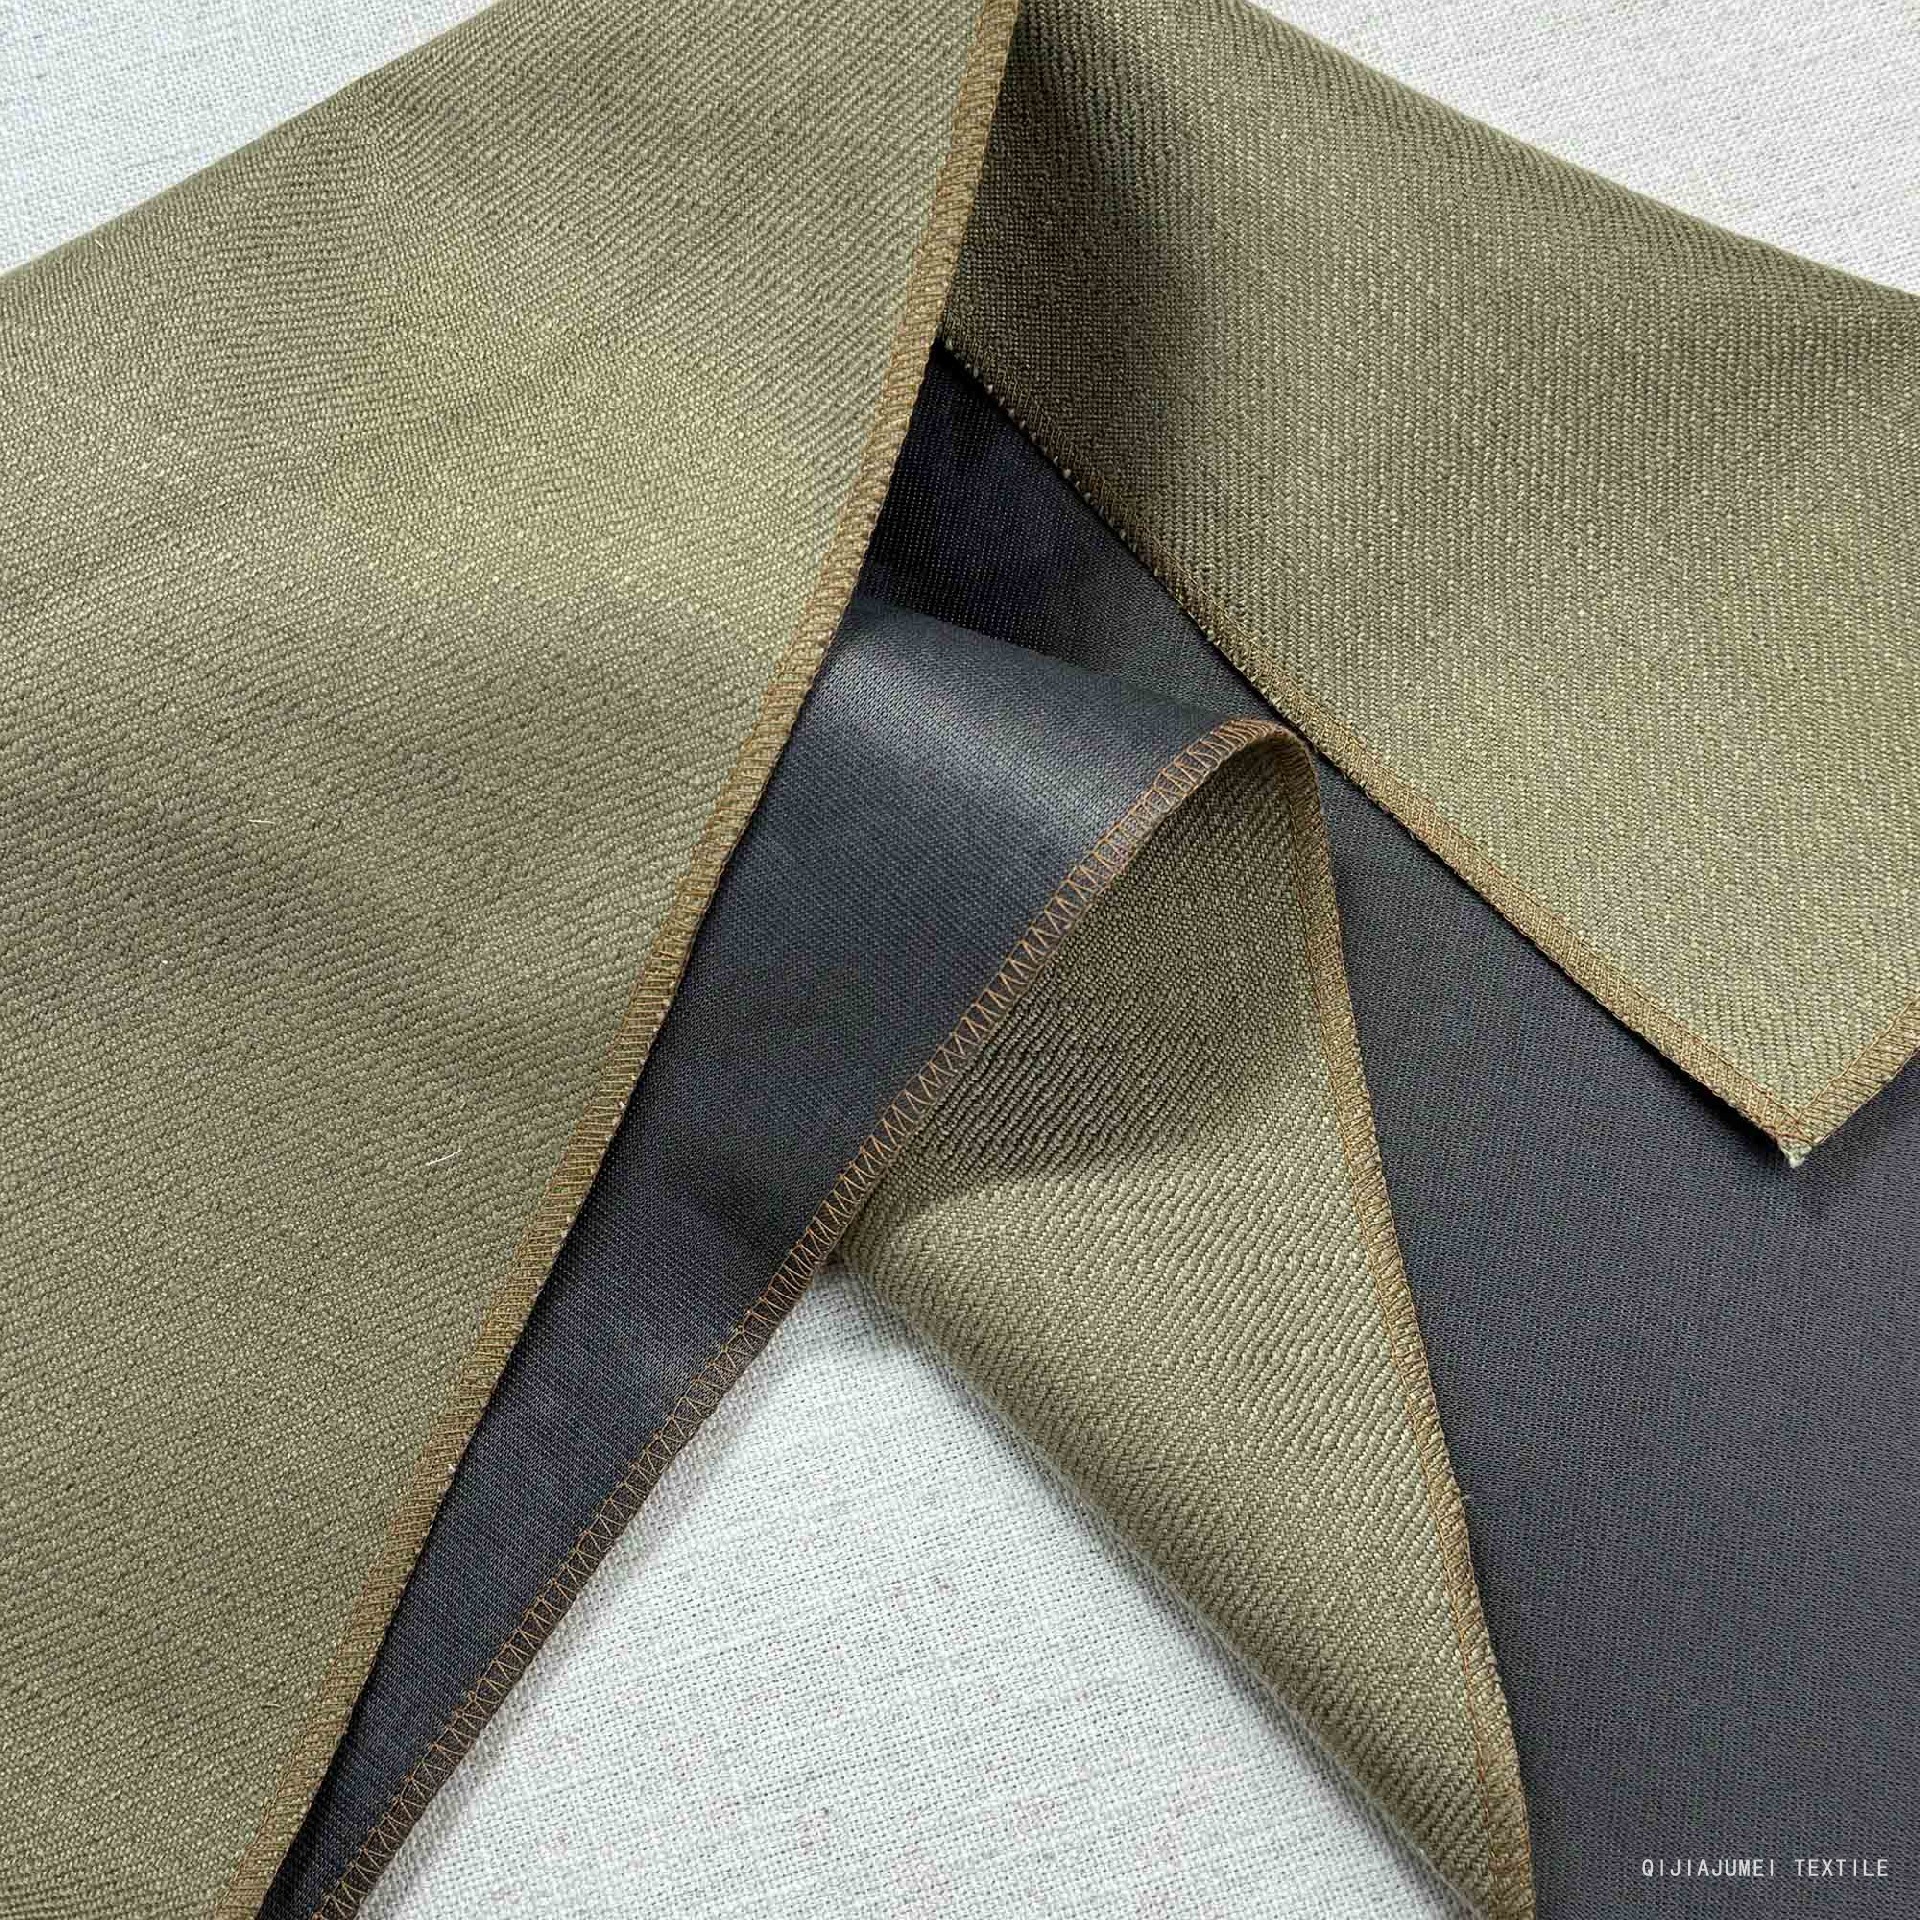 Woven Linen Look upholstery fabric